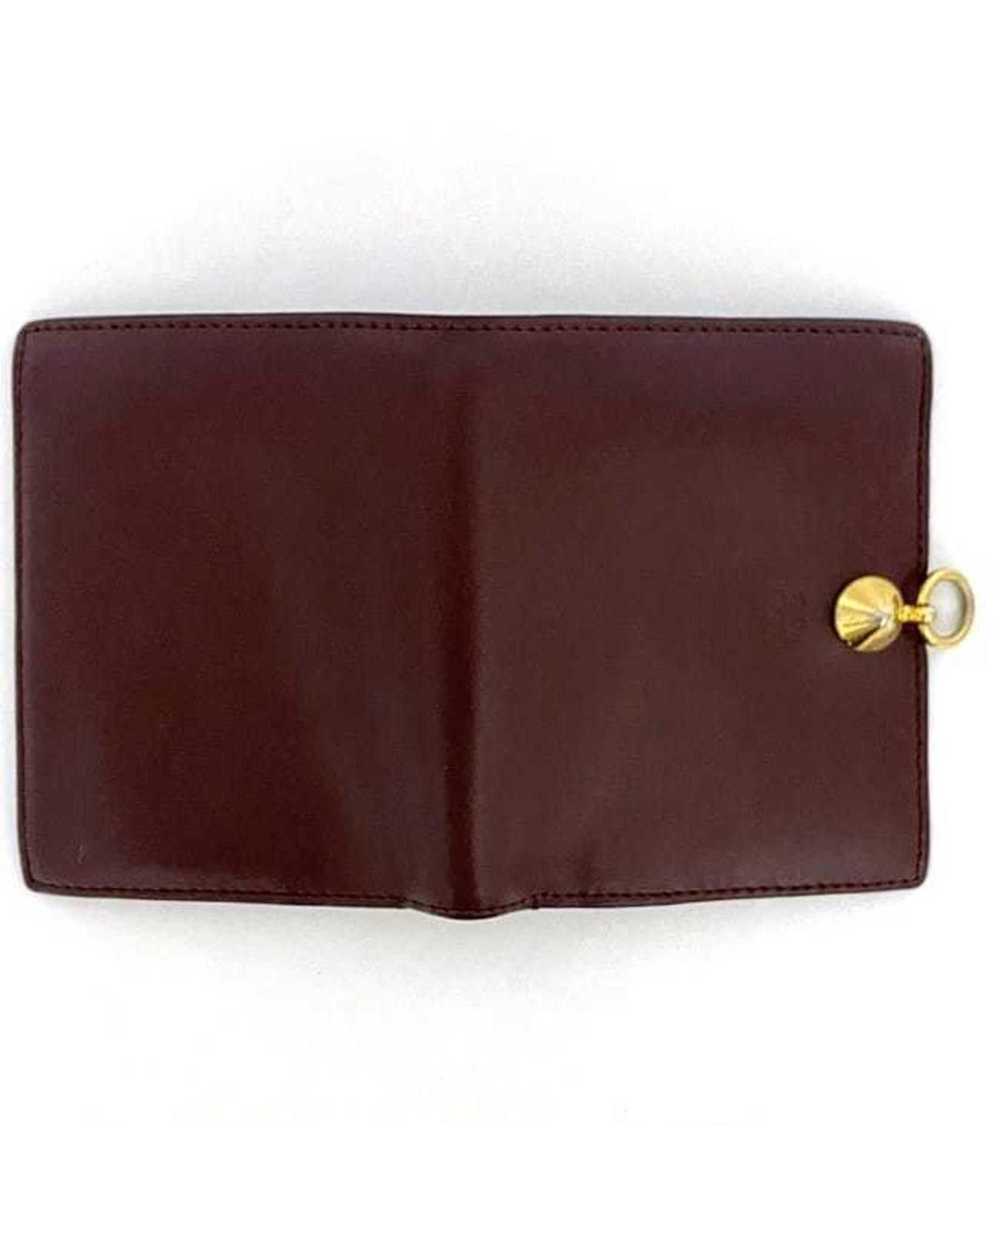 Fendi Burgundy Leather Compact Wallet - image 7